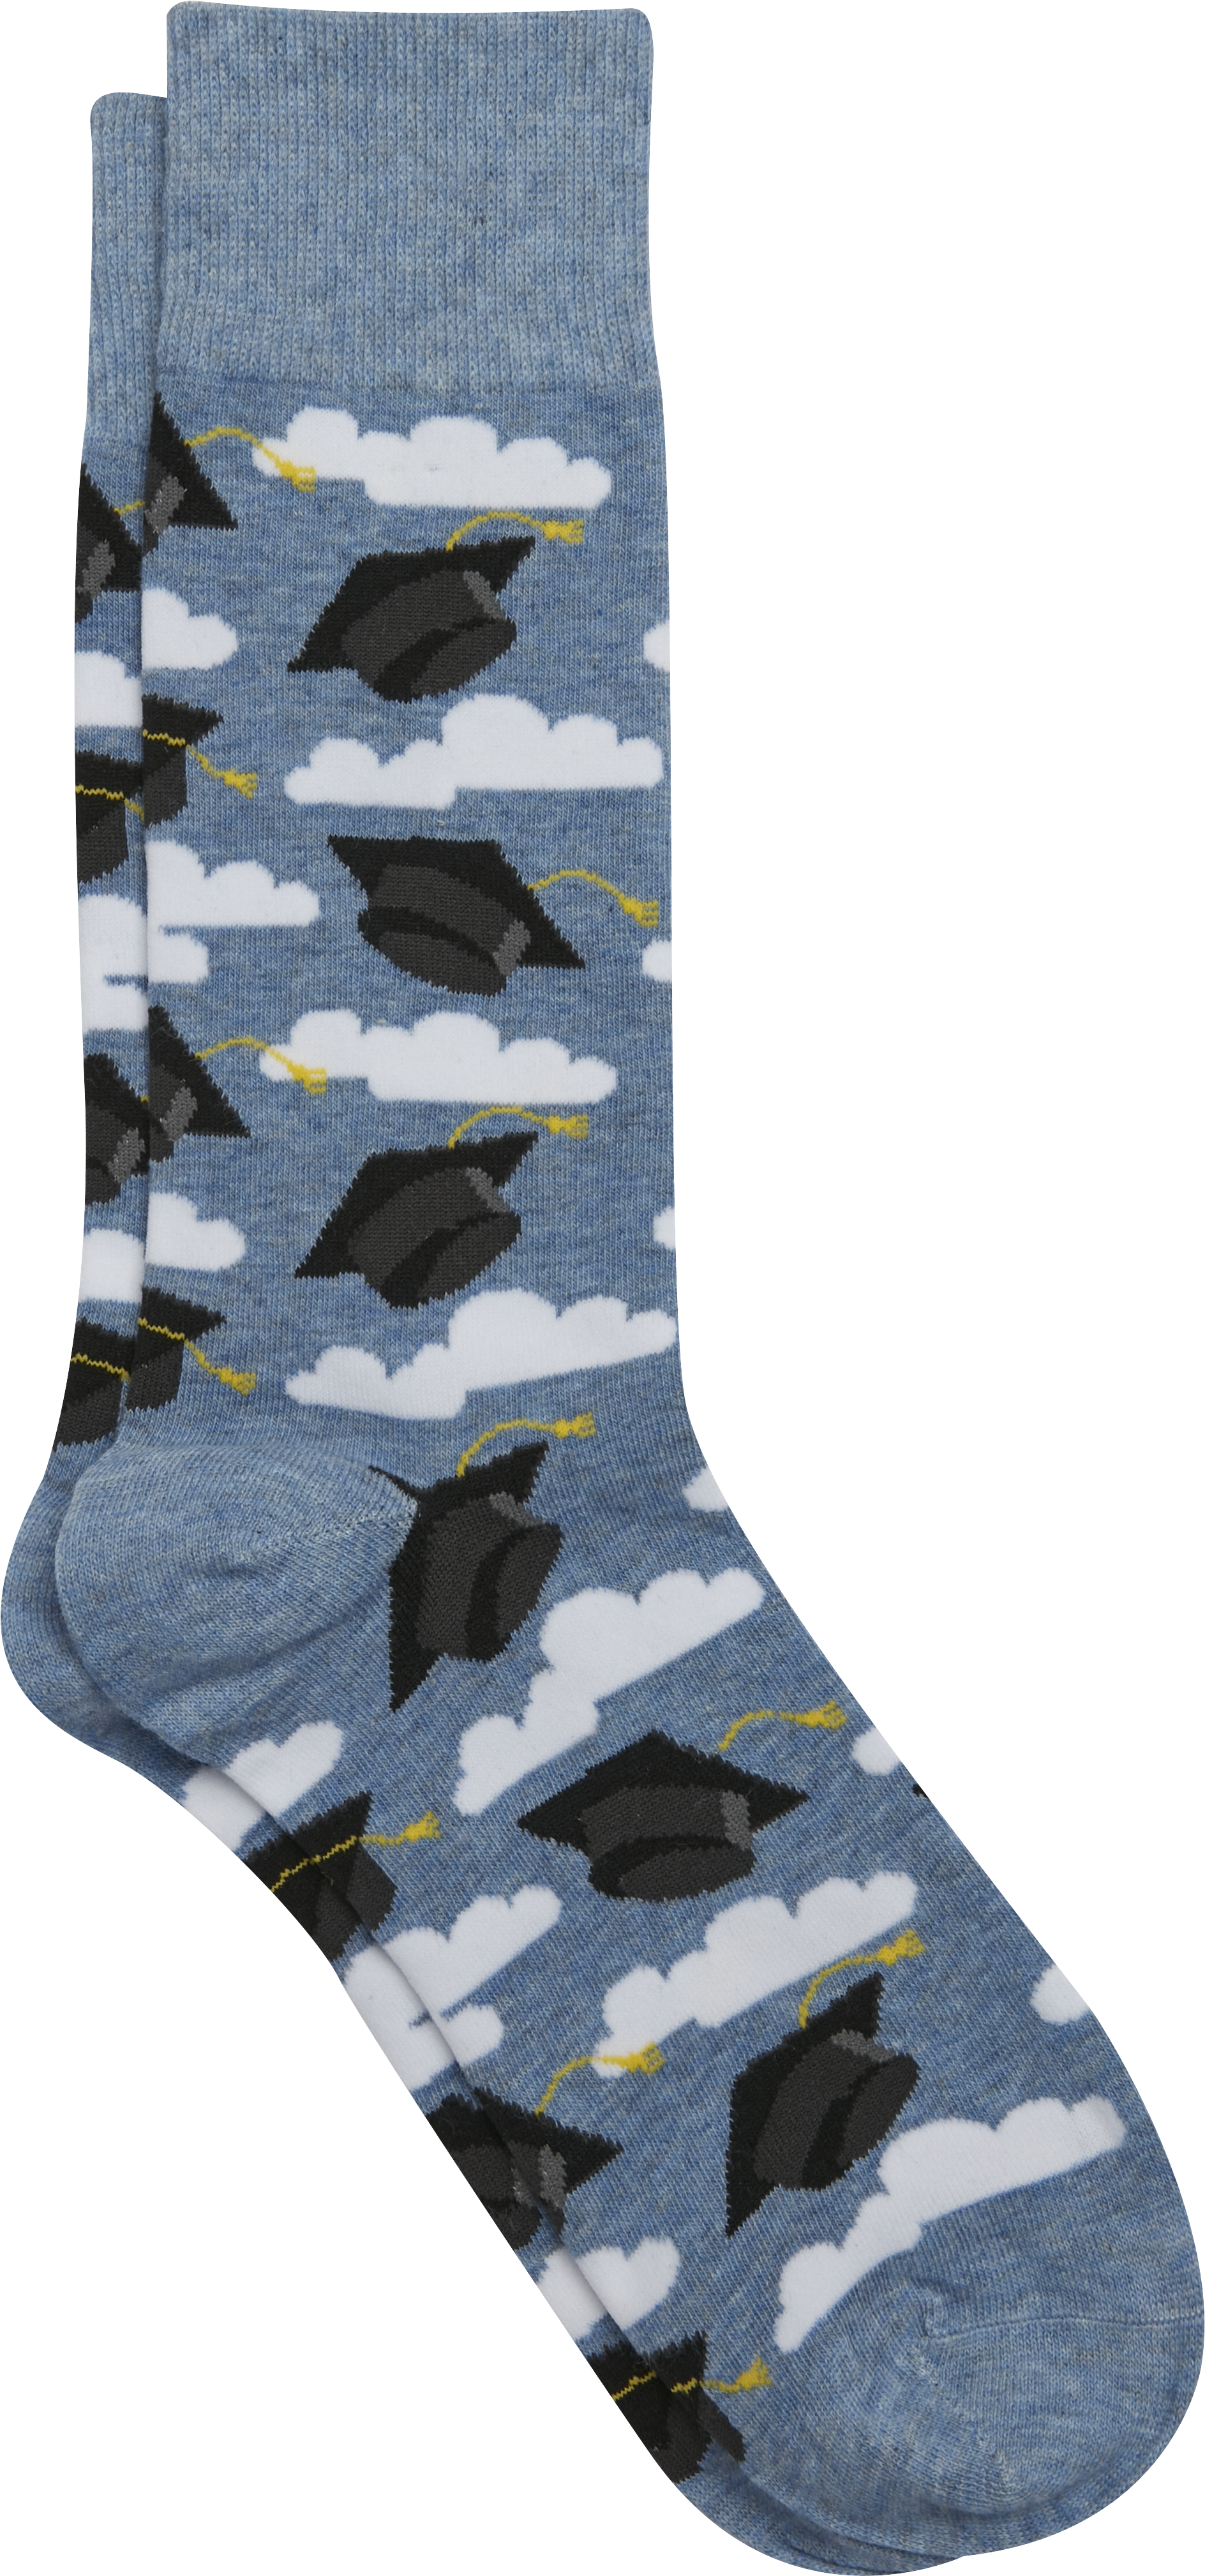 Graduation Socks